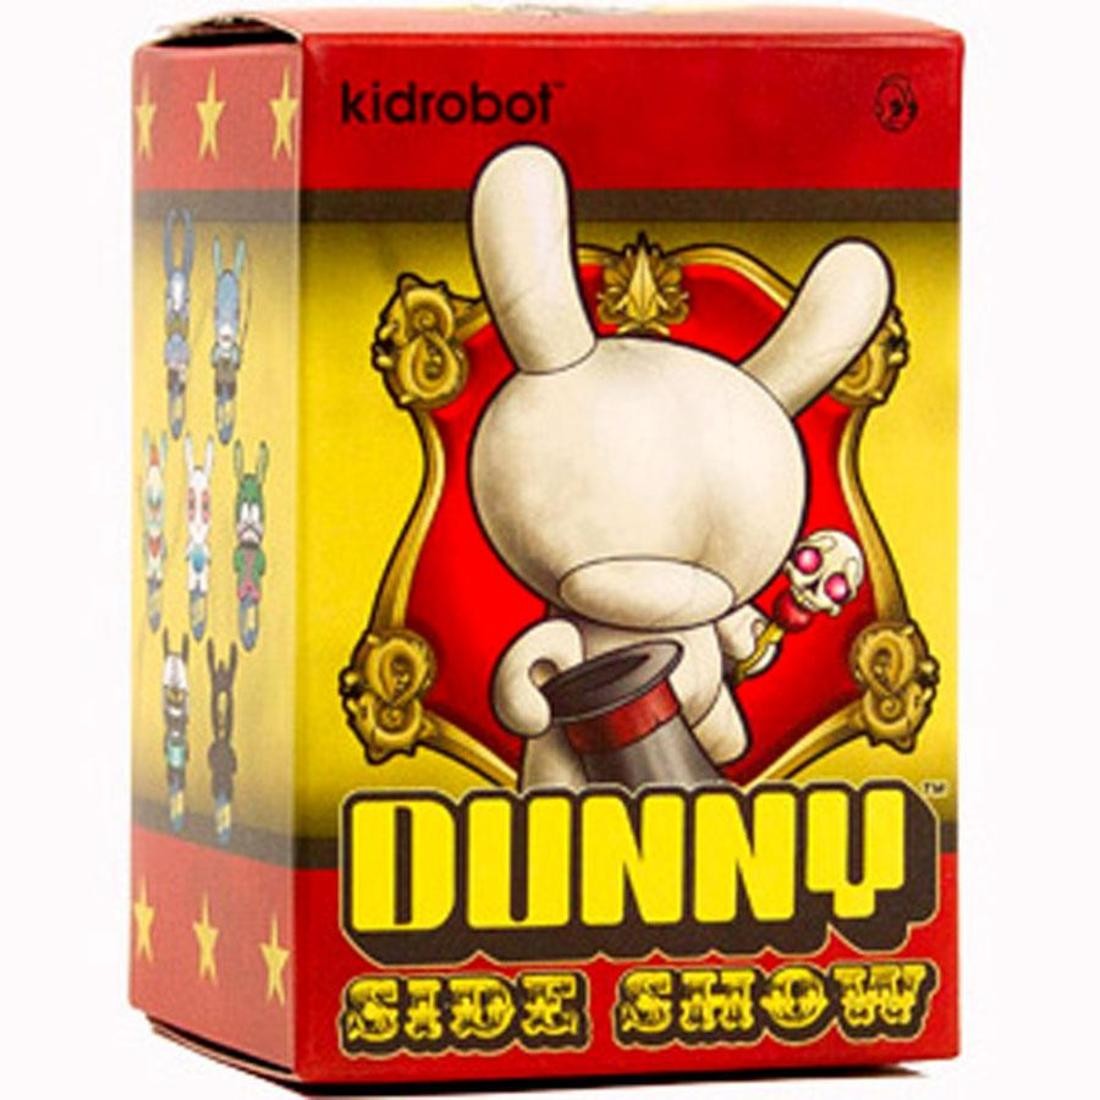 Kidrobot DUNNY 2013 SERIES 3inch mini figure Single Blind Box 